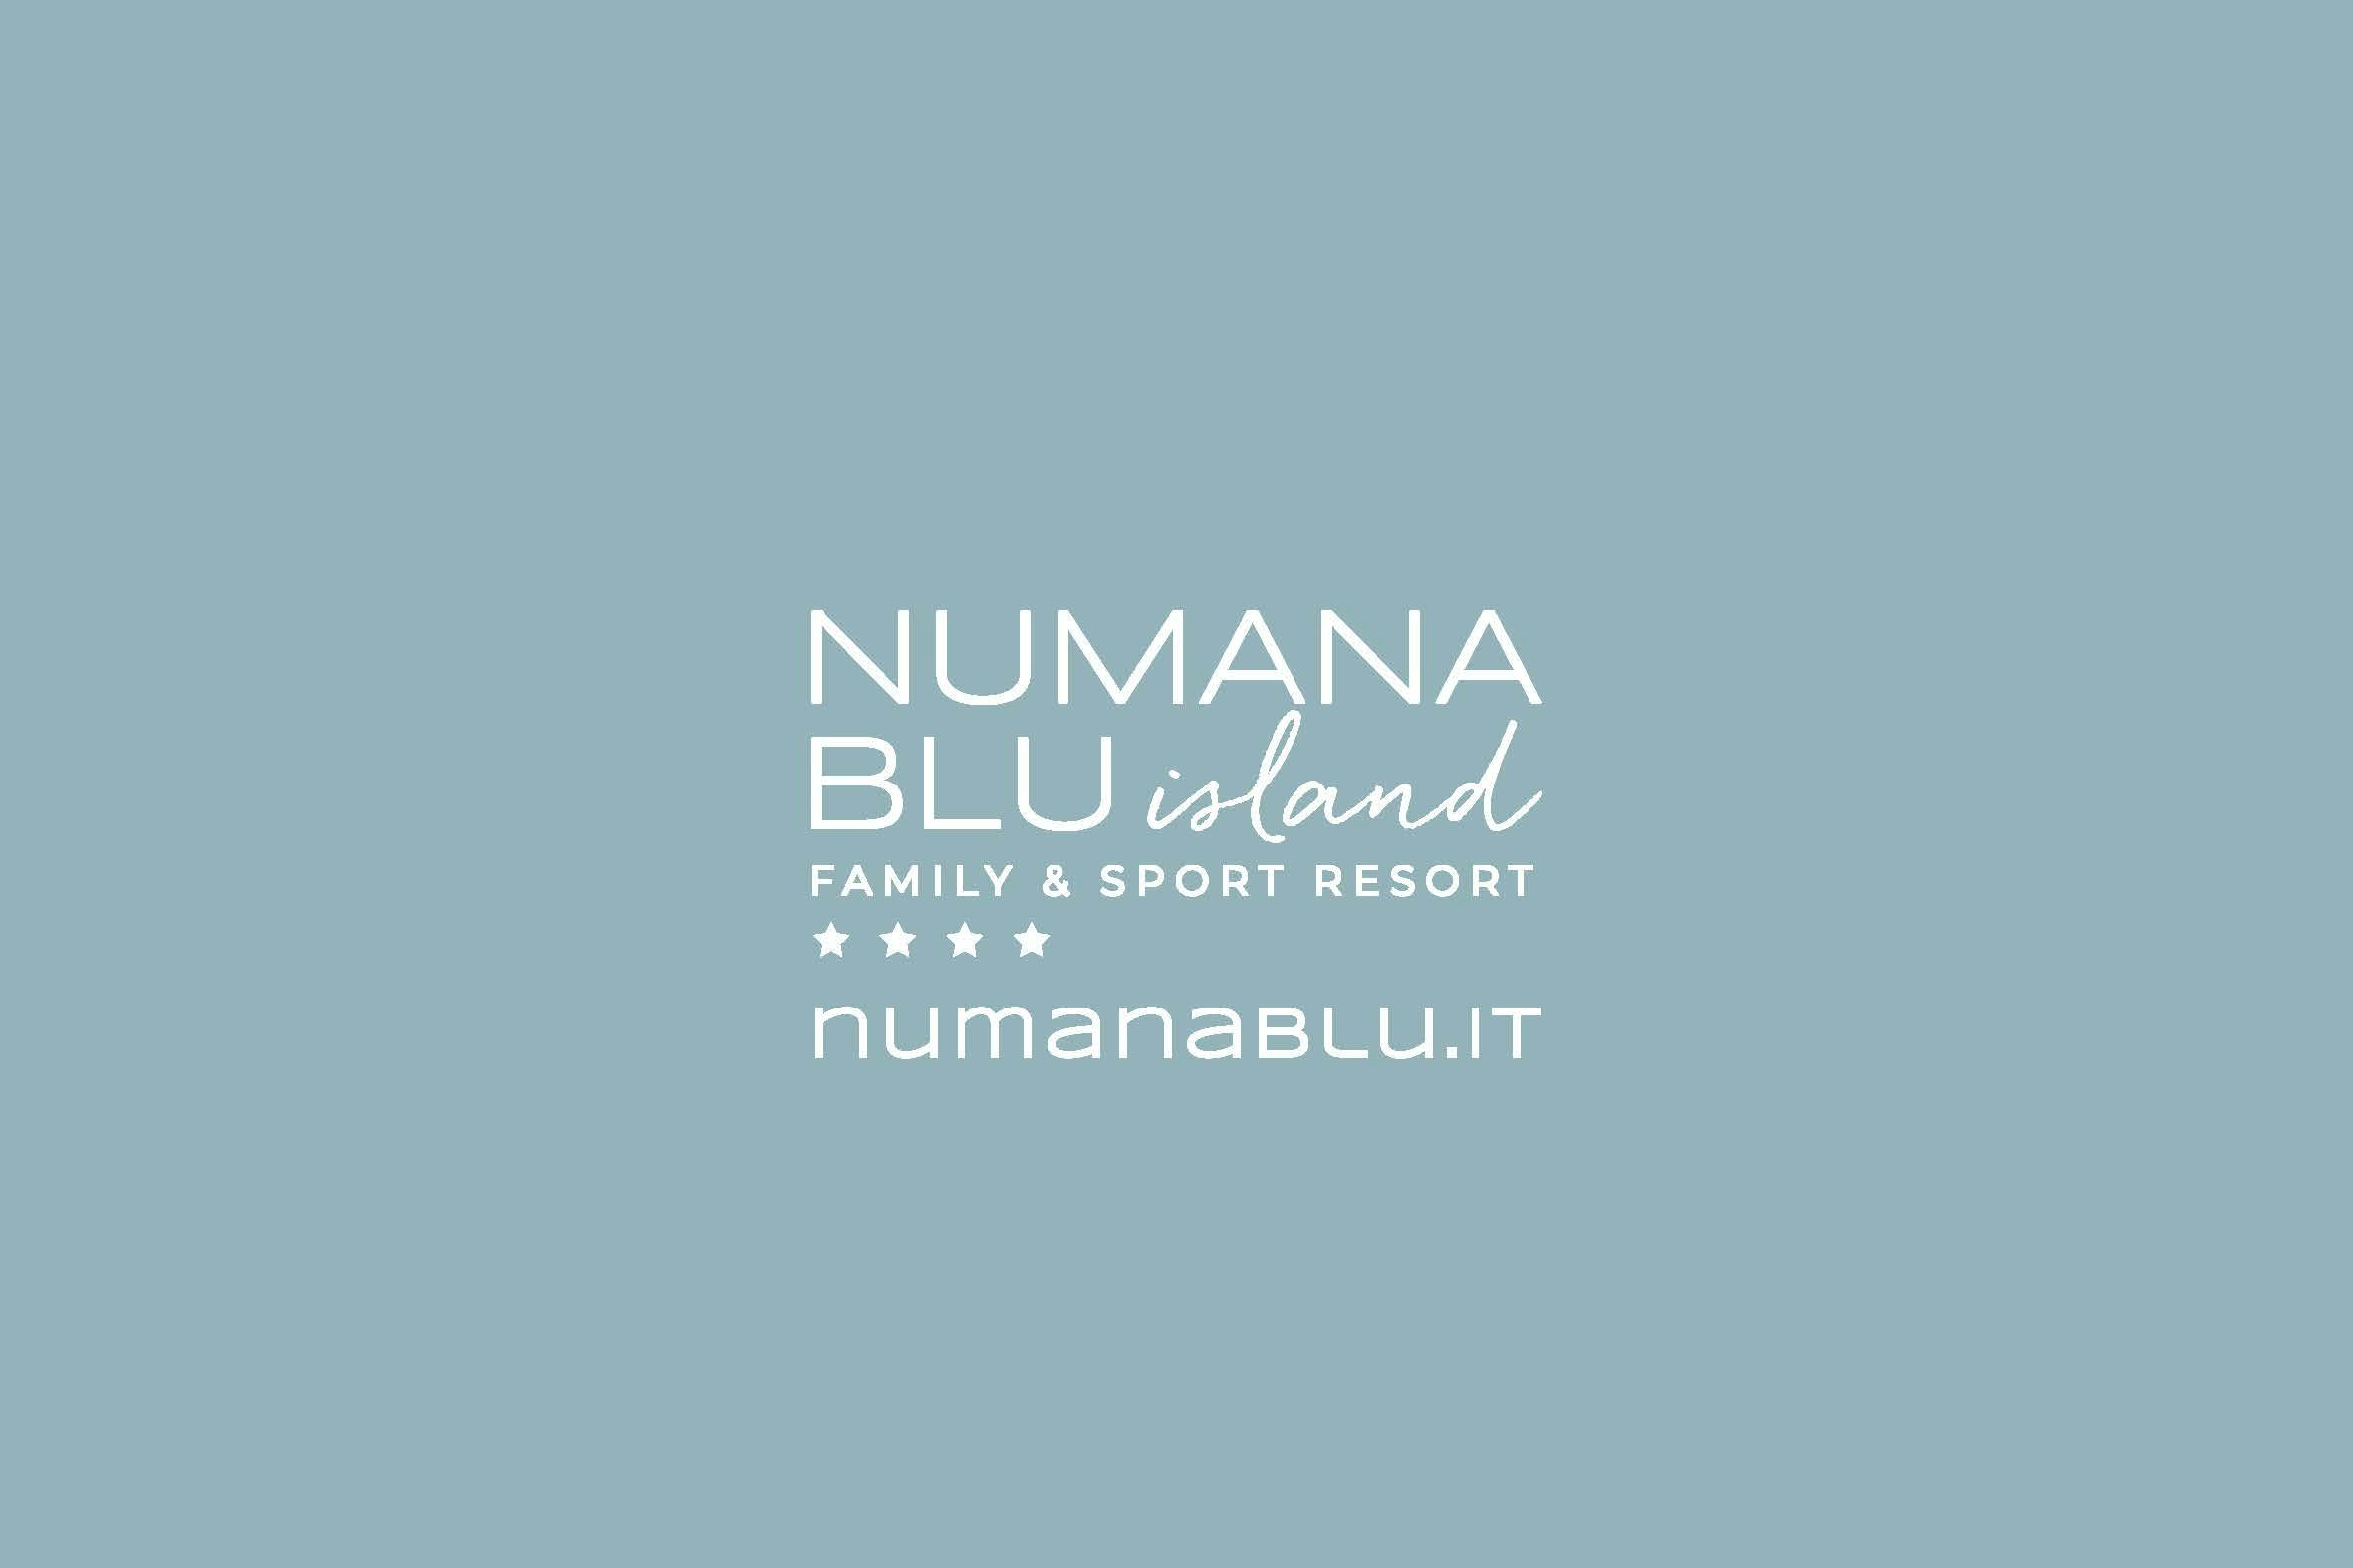 Numanablu Island - Family & Sport Resort